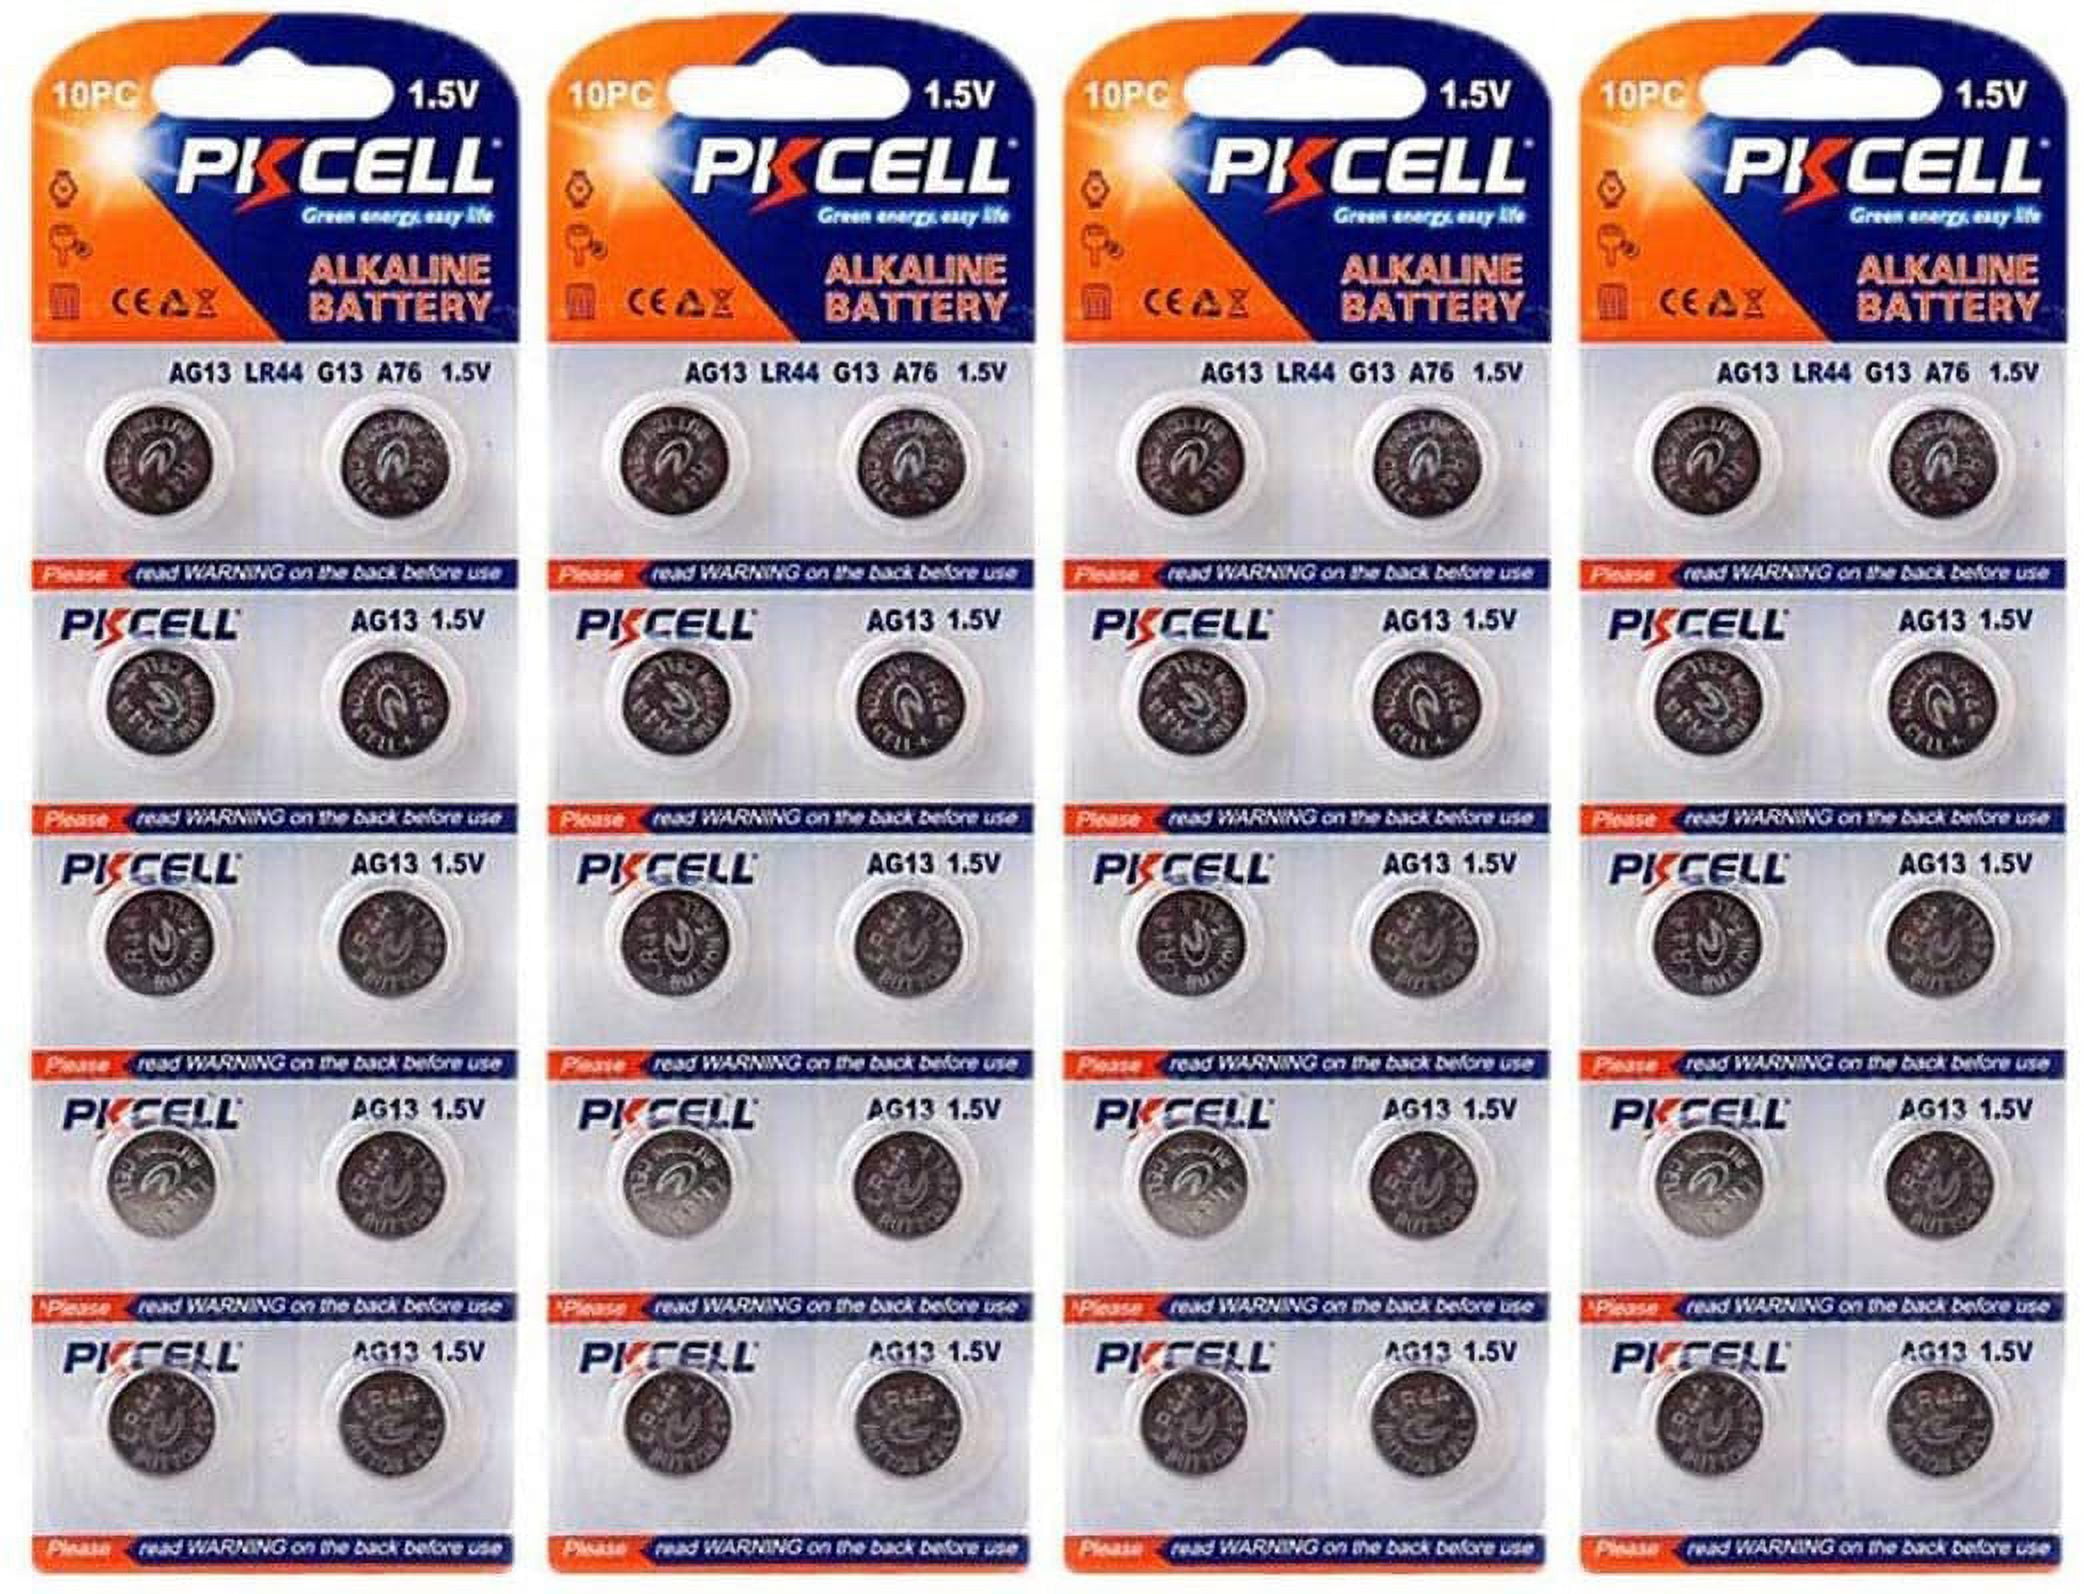  PKCELL LR44 A76 357 G13 Alkaline Watch Battery,30 pc : Health &  Household